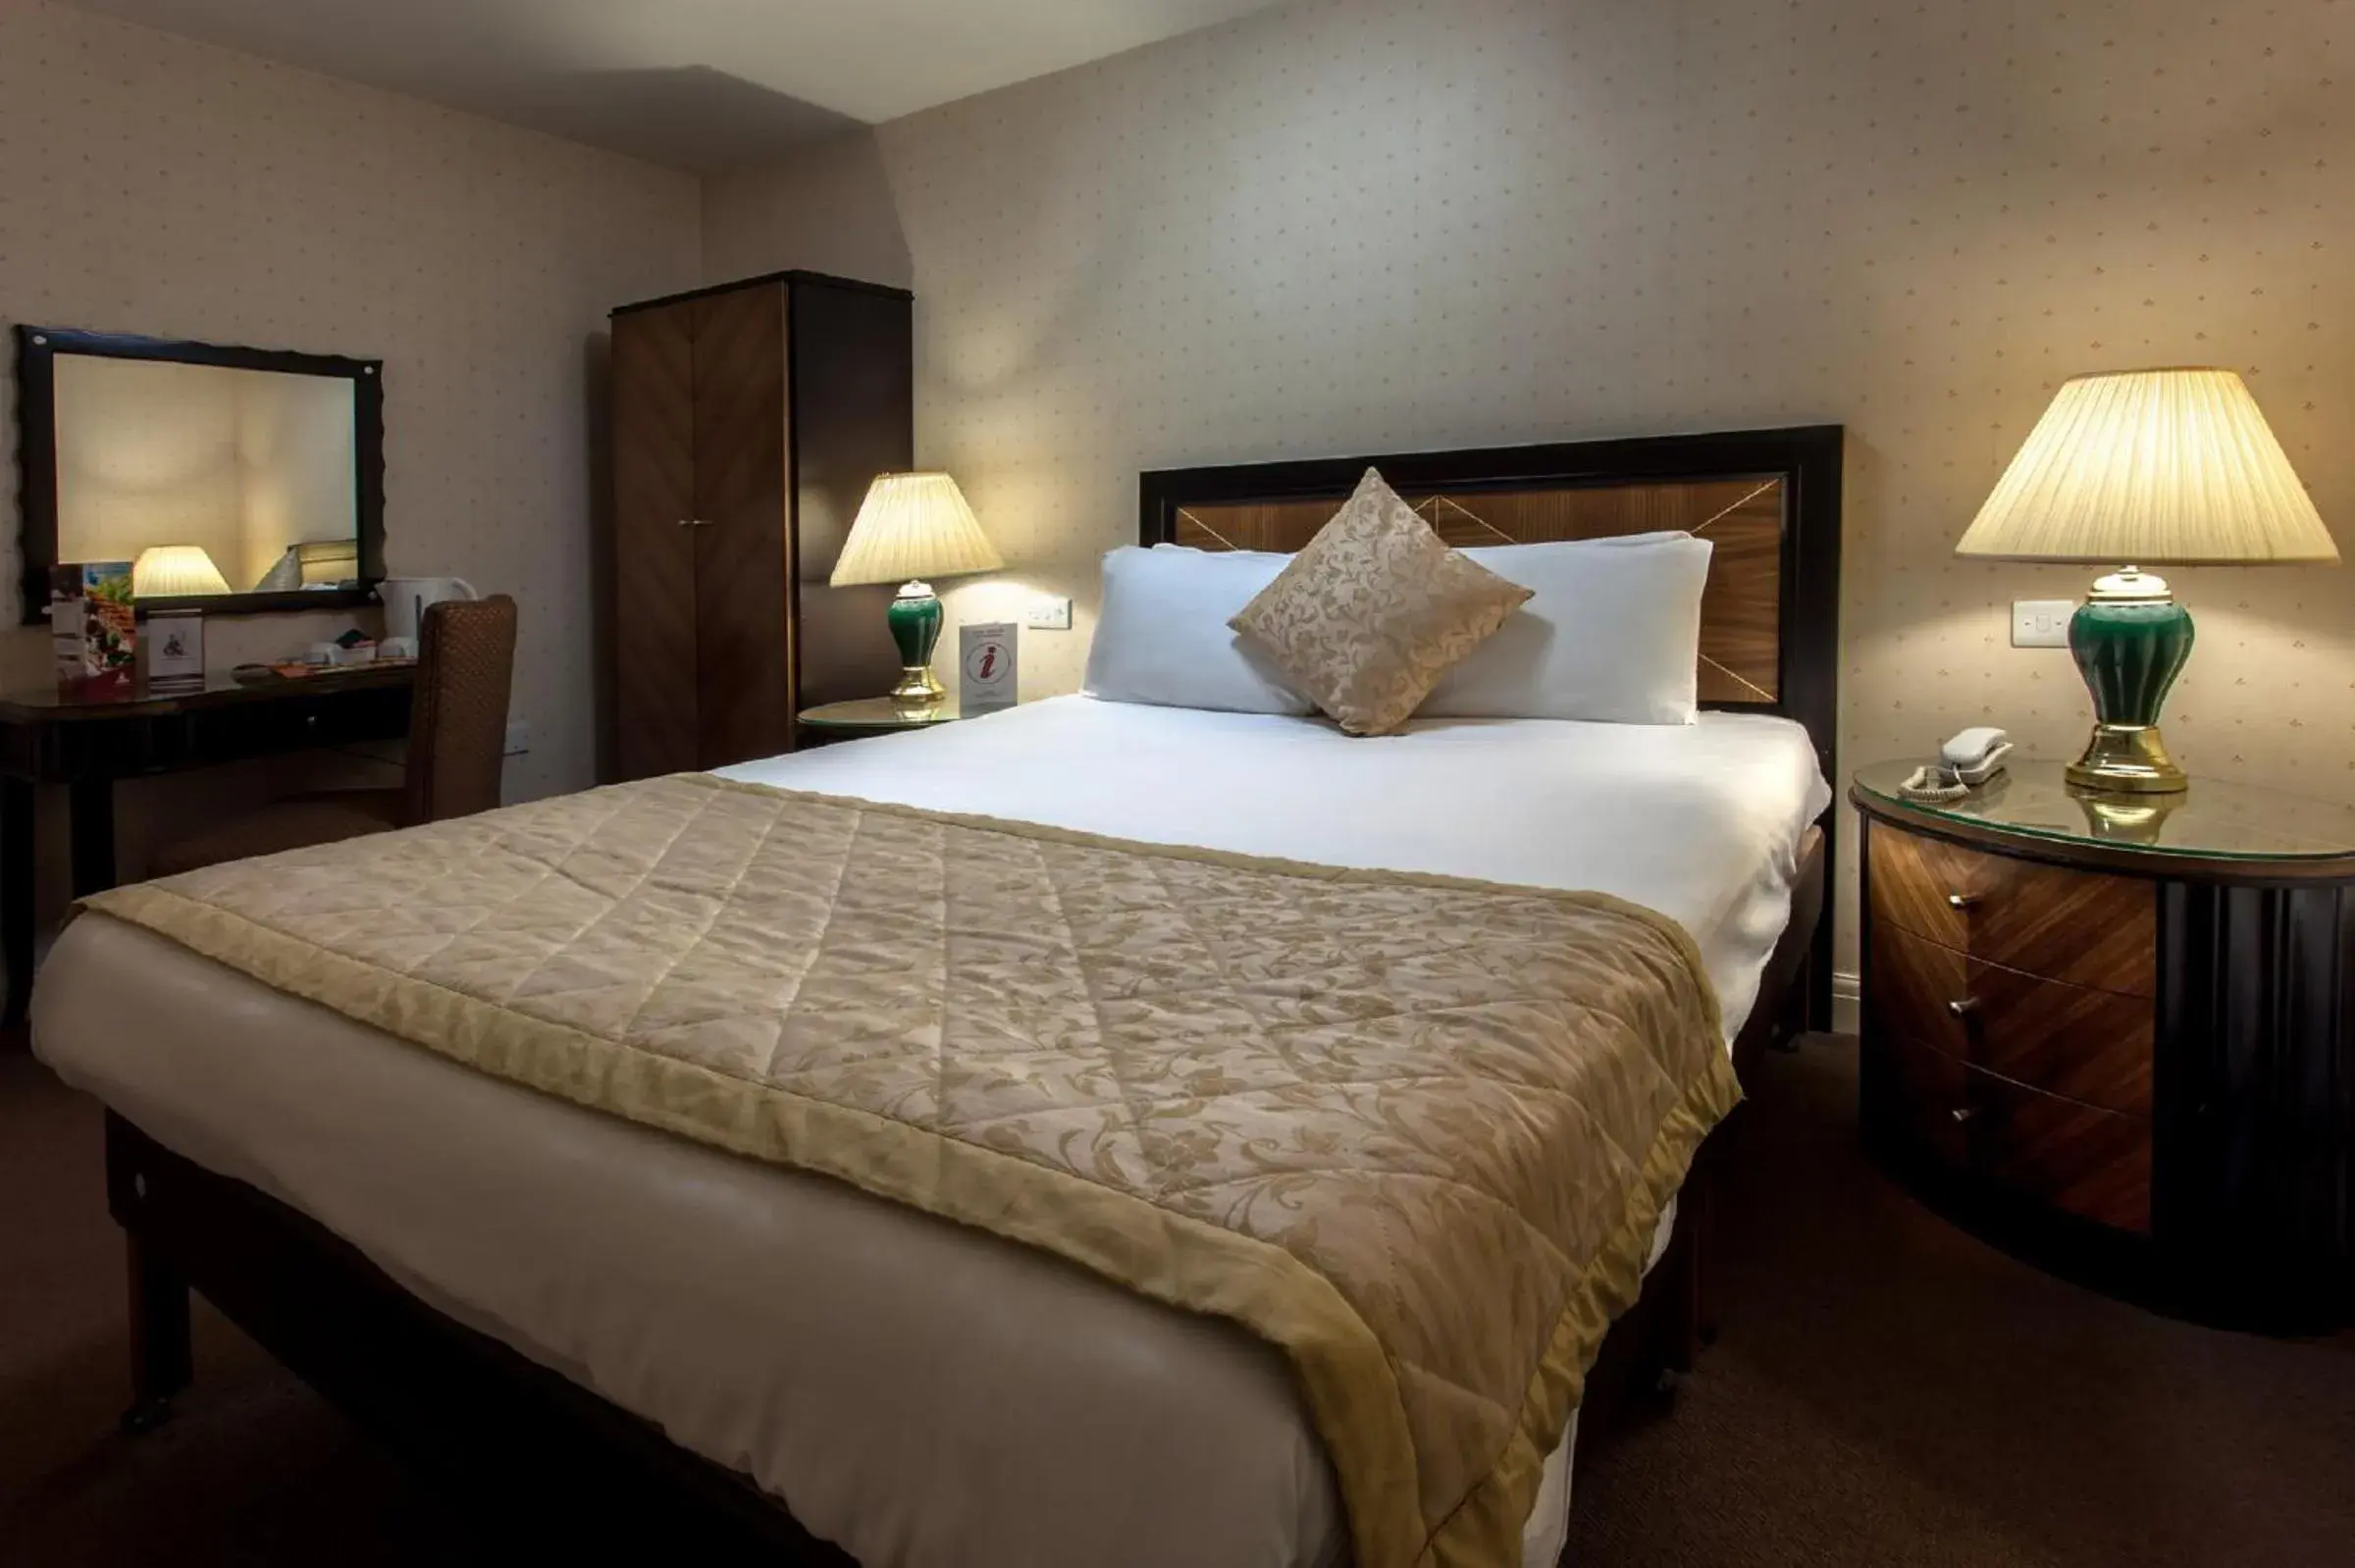 Bed, Room Photo in Britannia Hotel, Hampstead